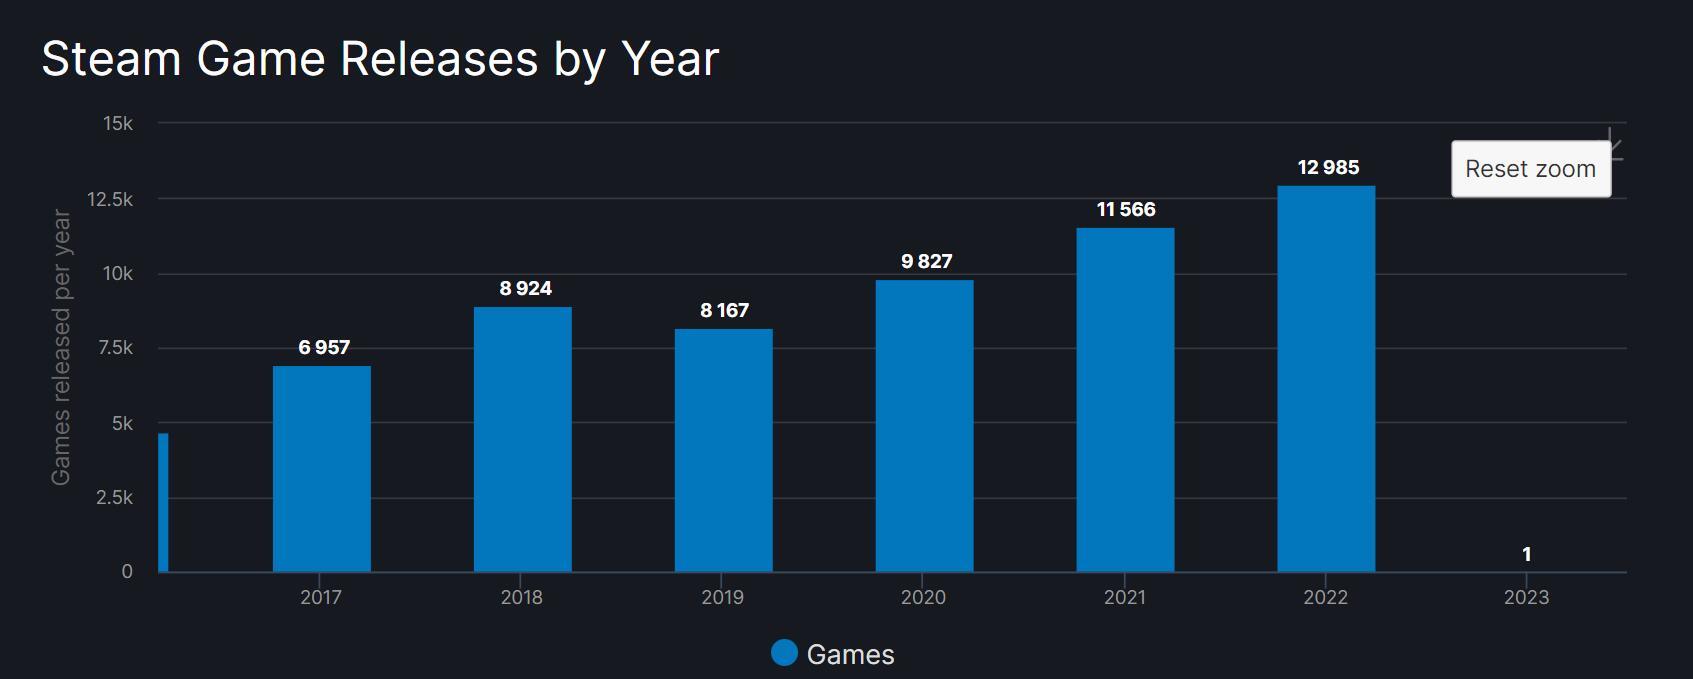 【PC遊戲】2022年Steam總共推出12985款新遊戲！10月份最熱鬧-第1張